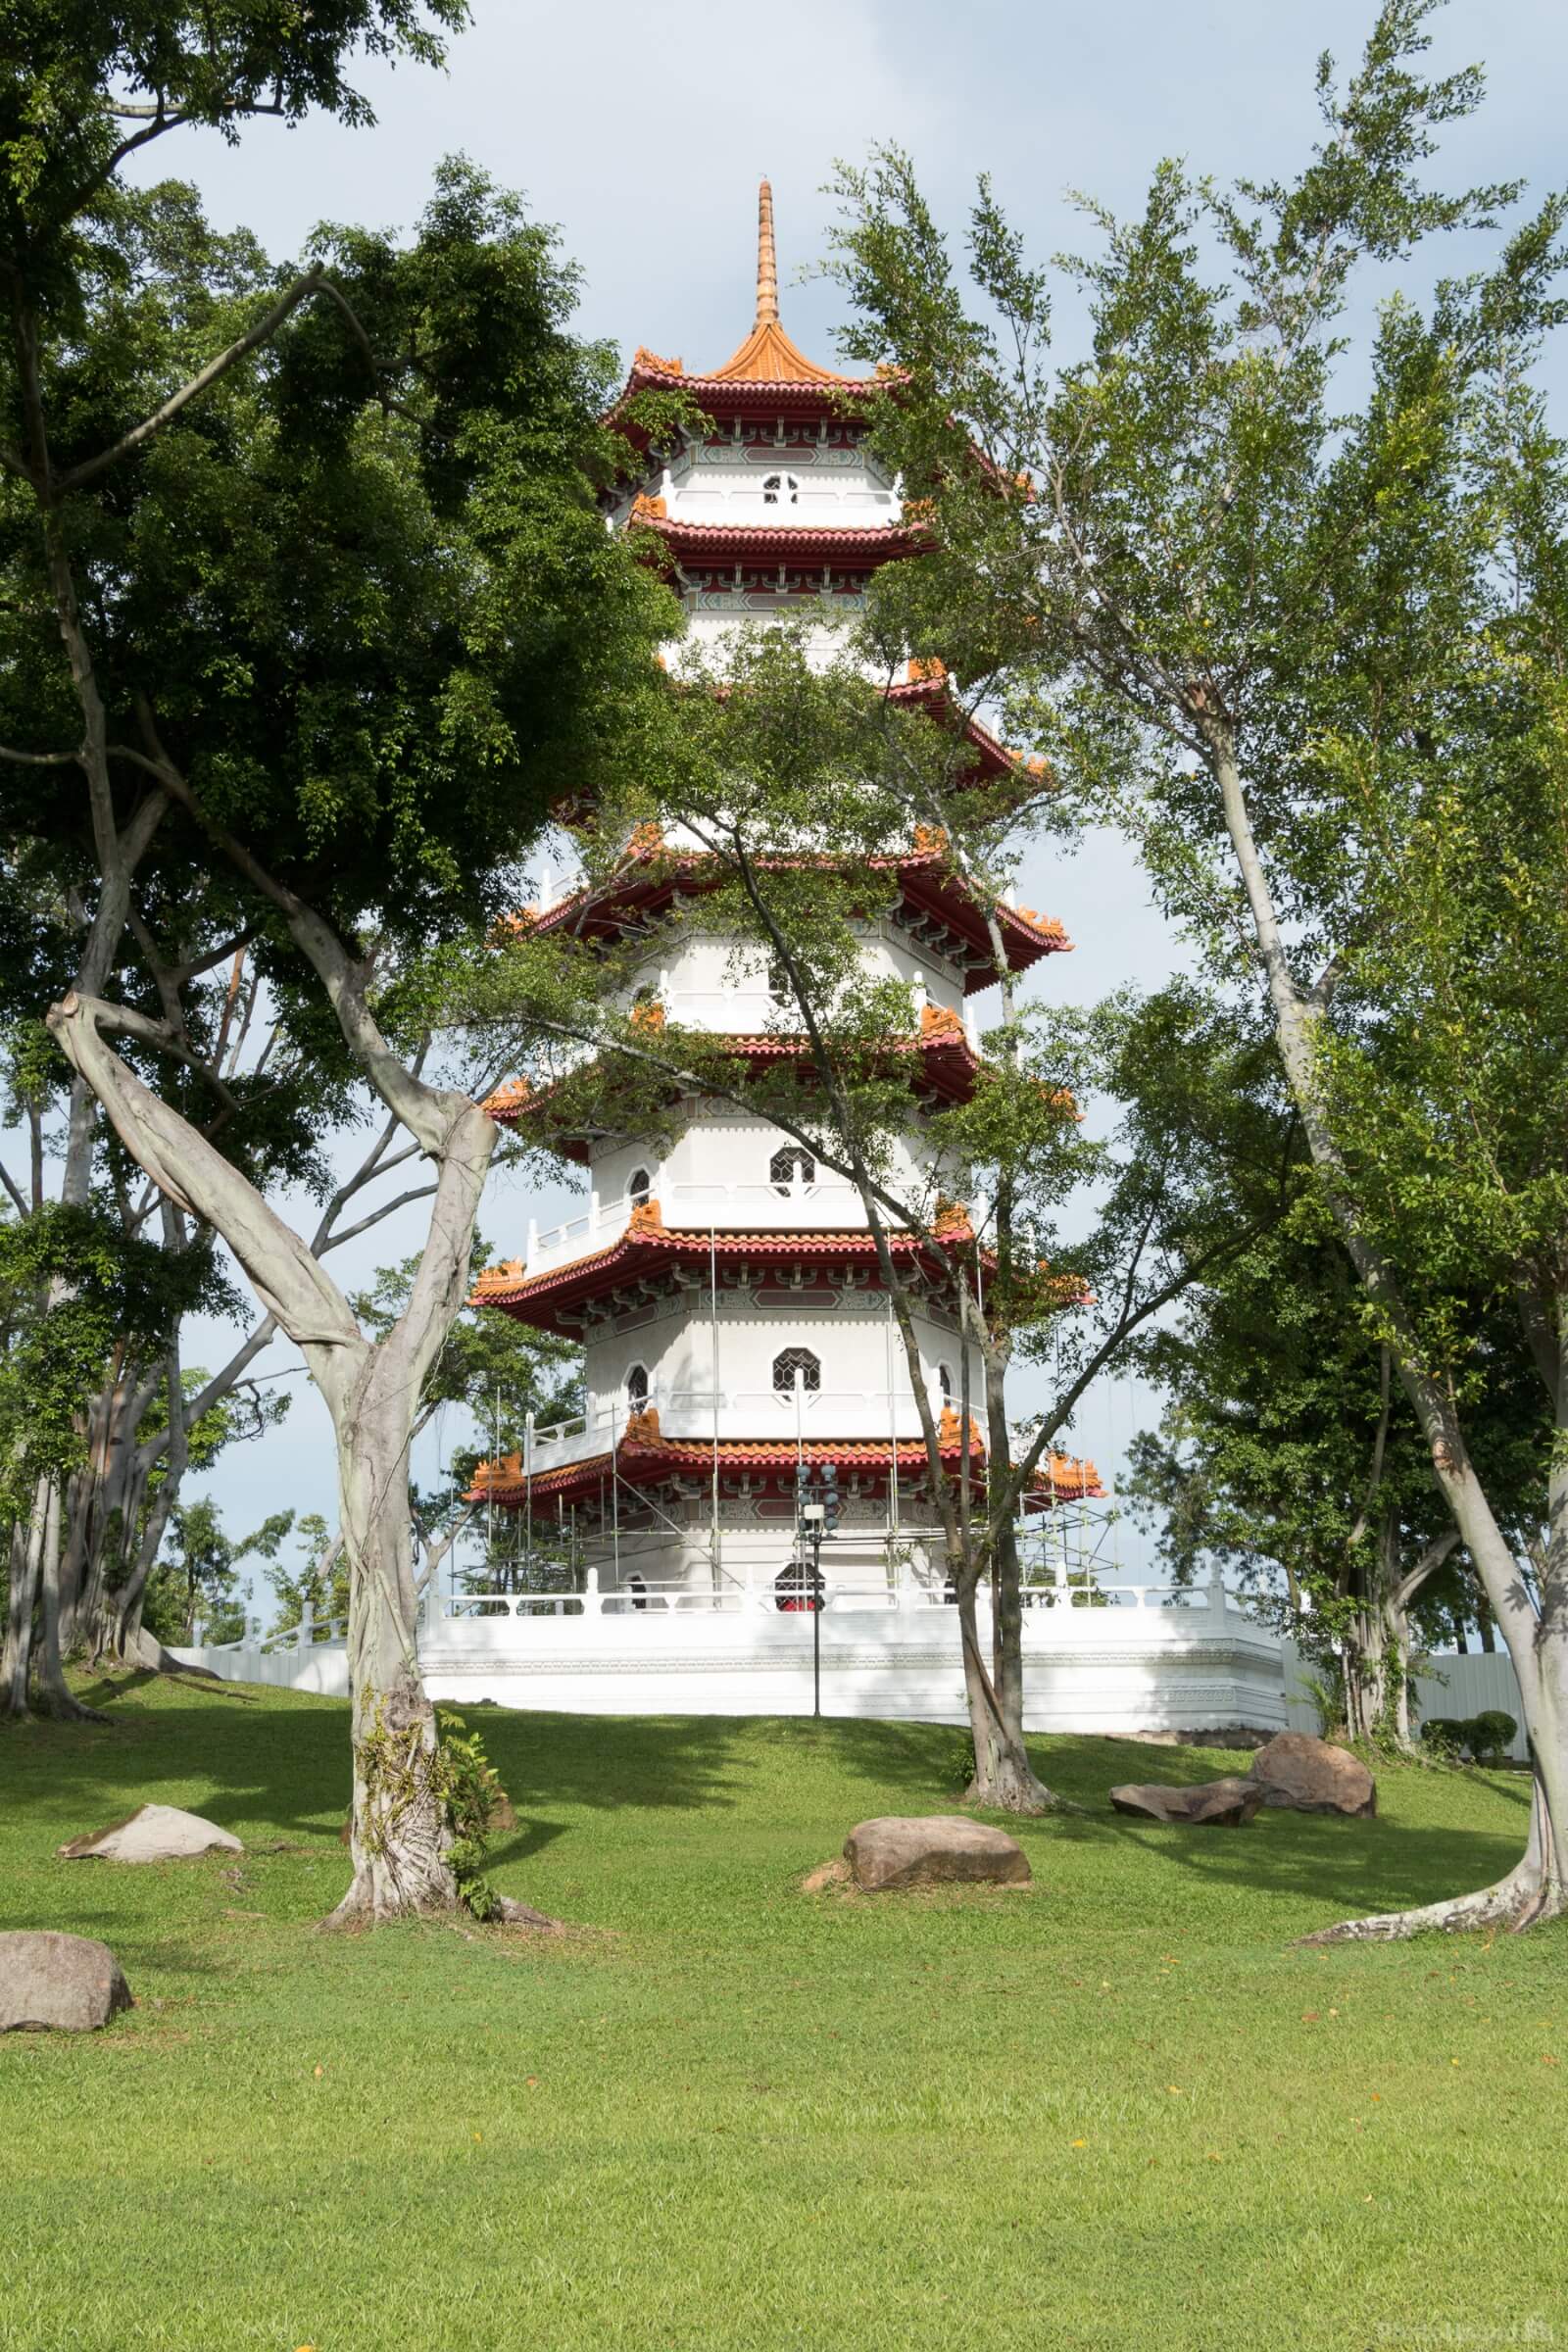 Image of Seven Storey Pagoda by Ruud Bijvank